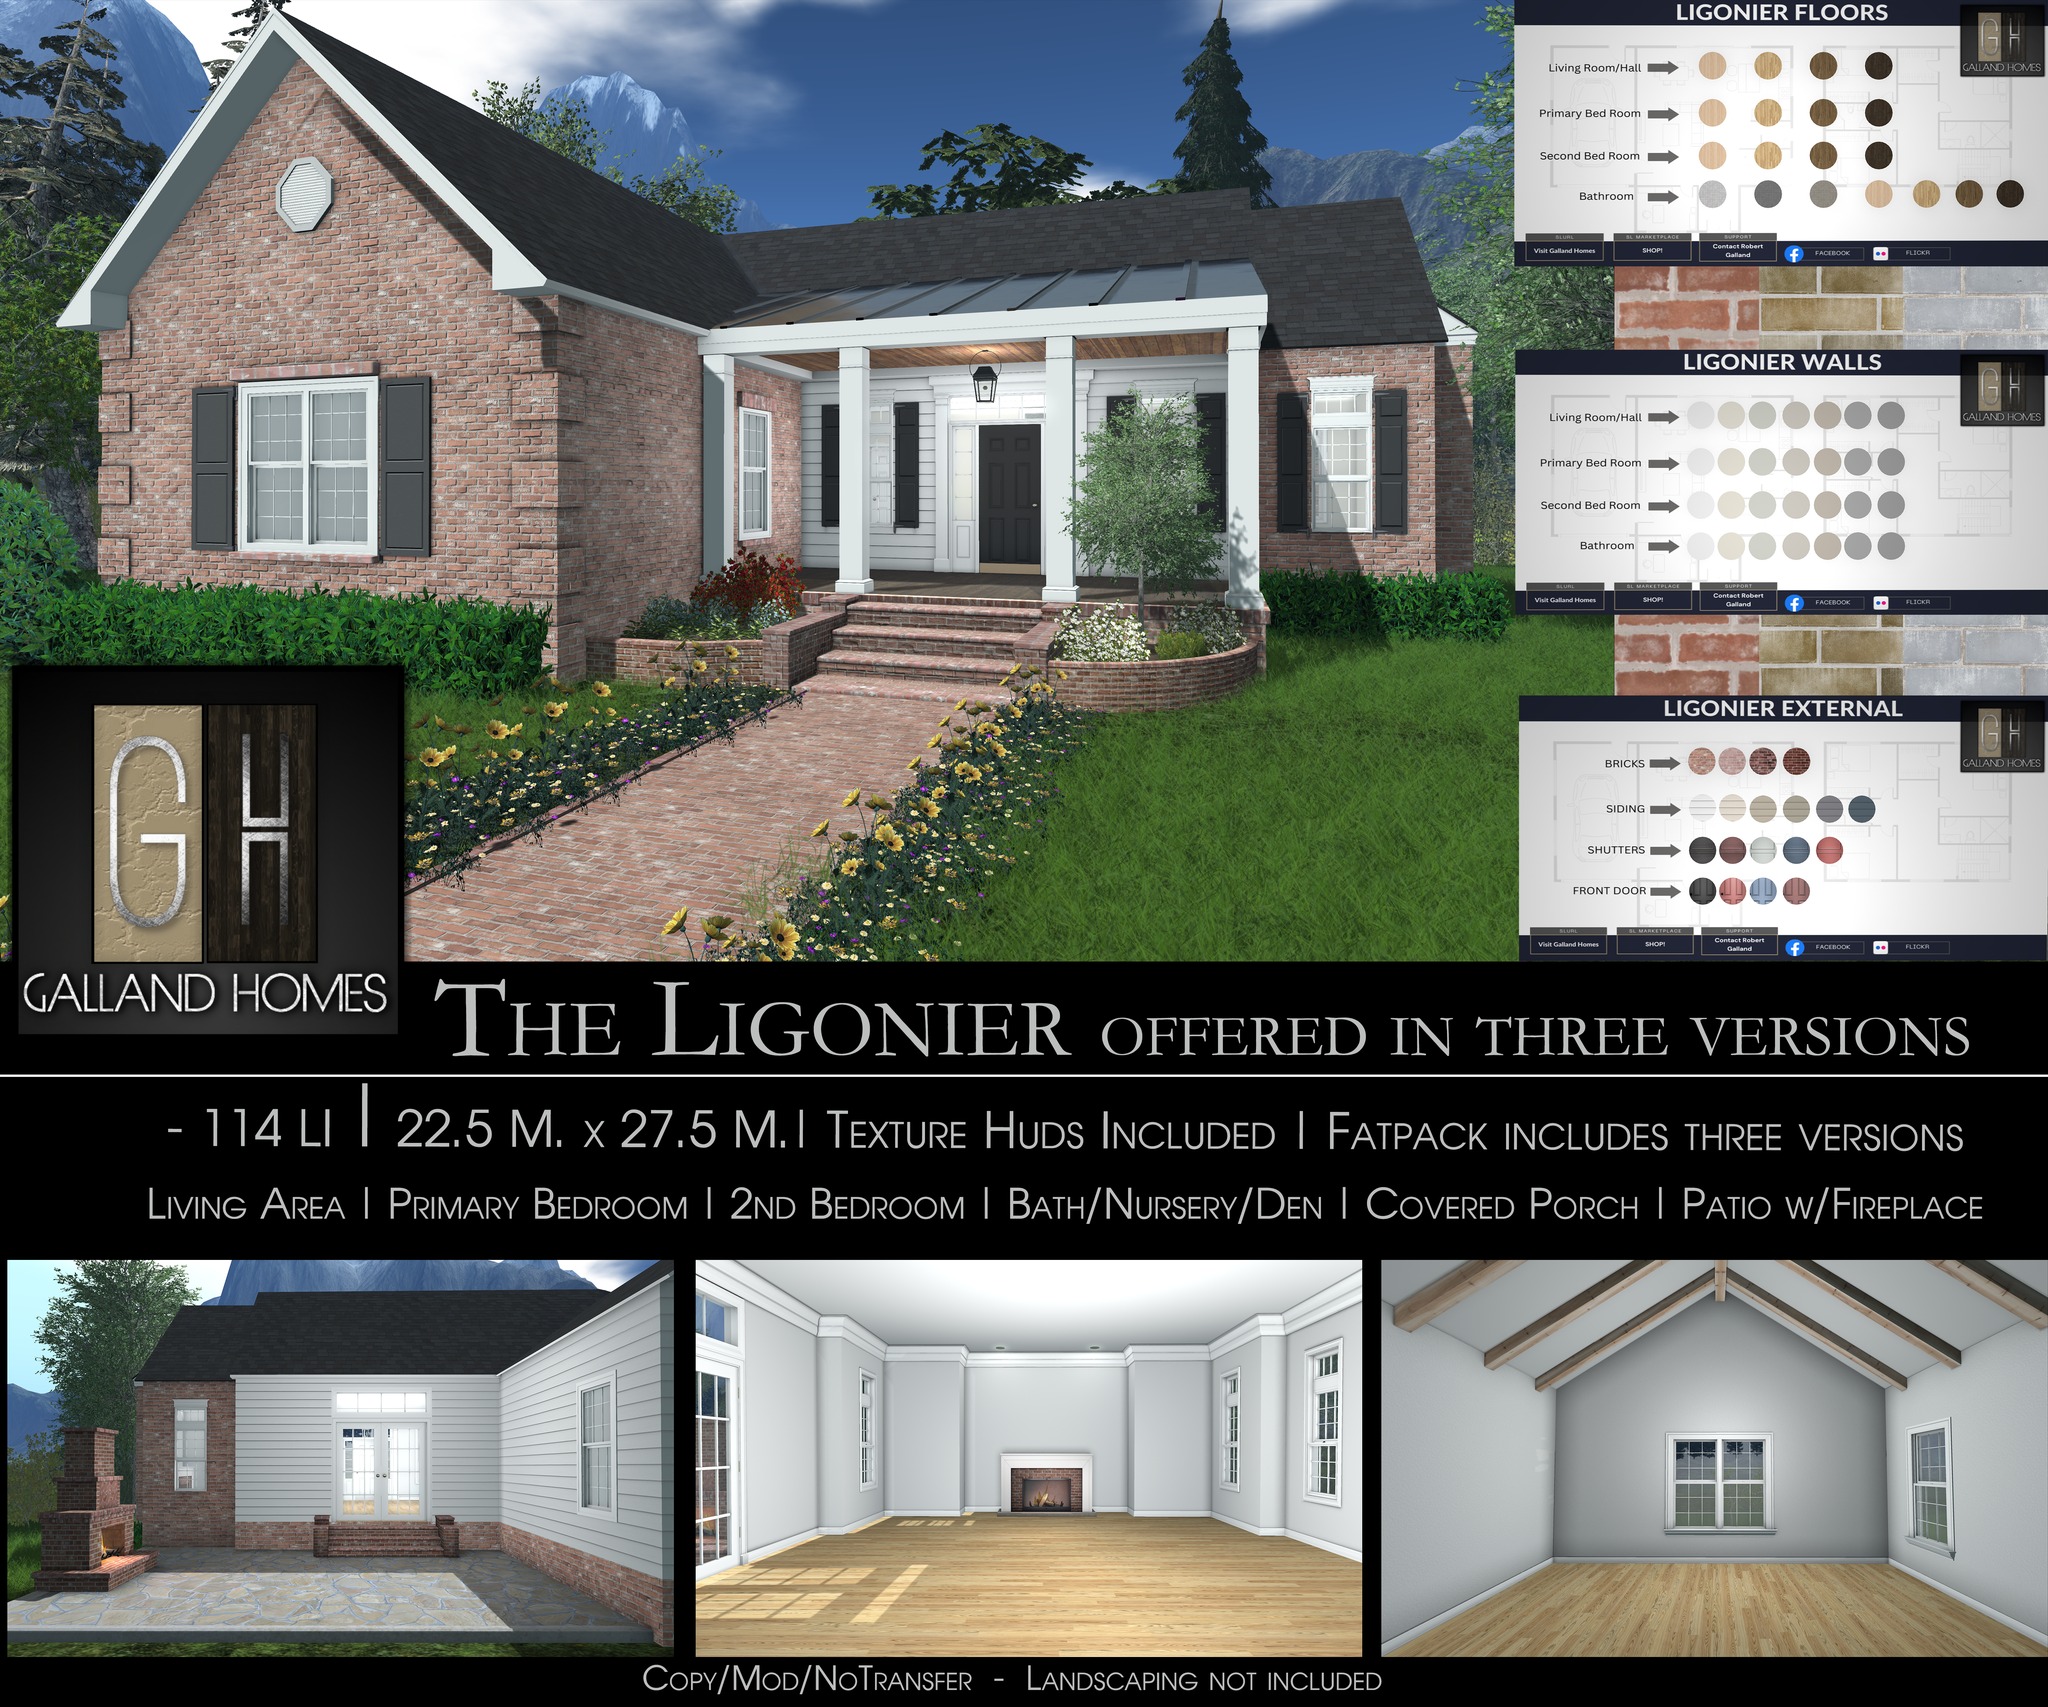 Galland Homes – The Ligonier